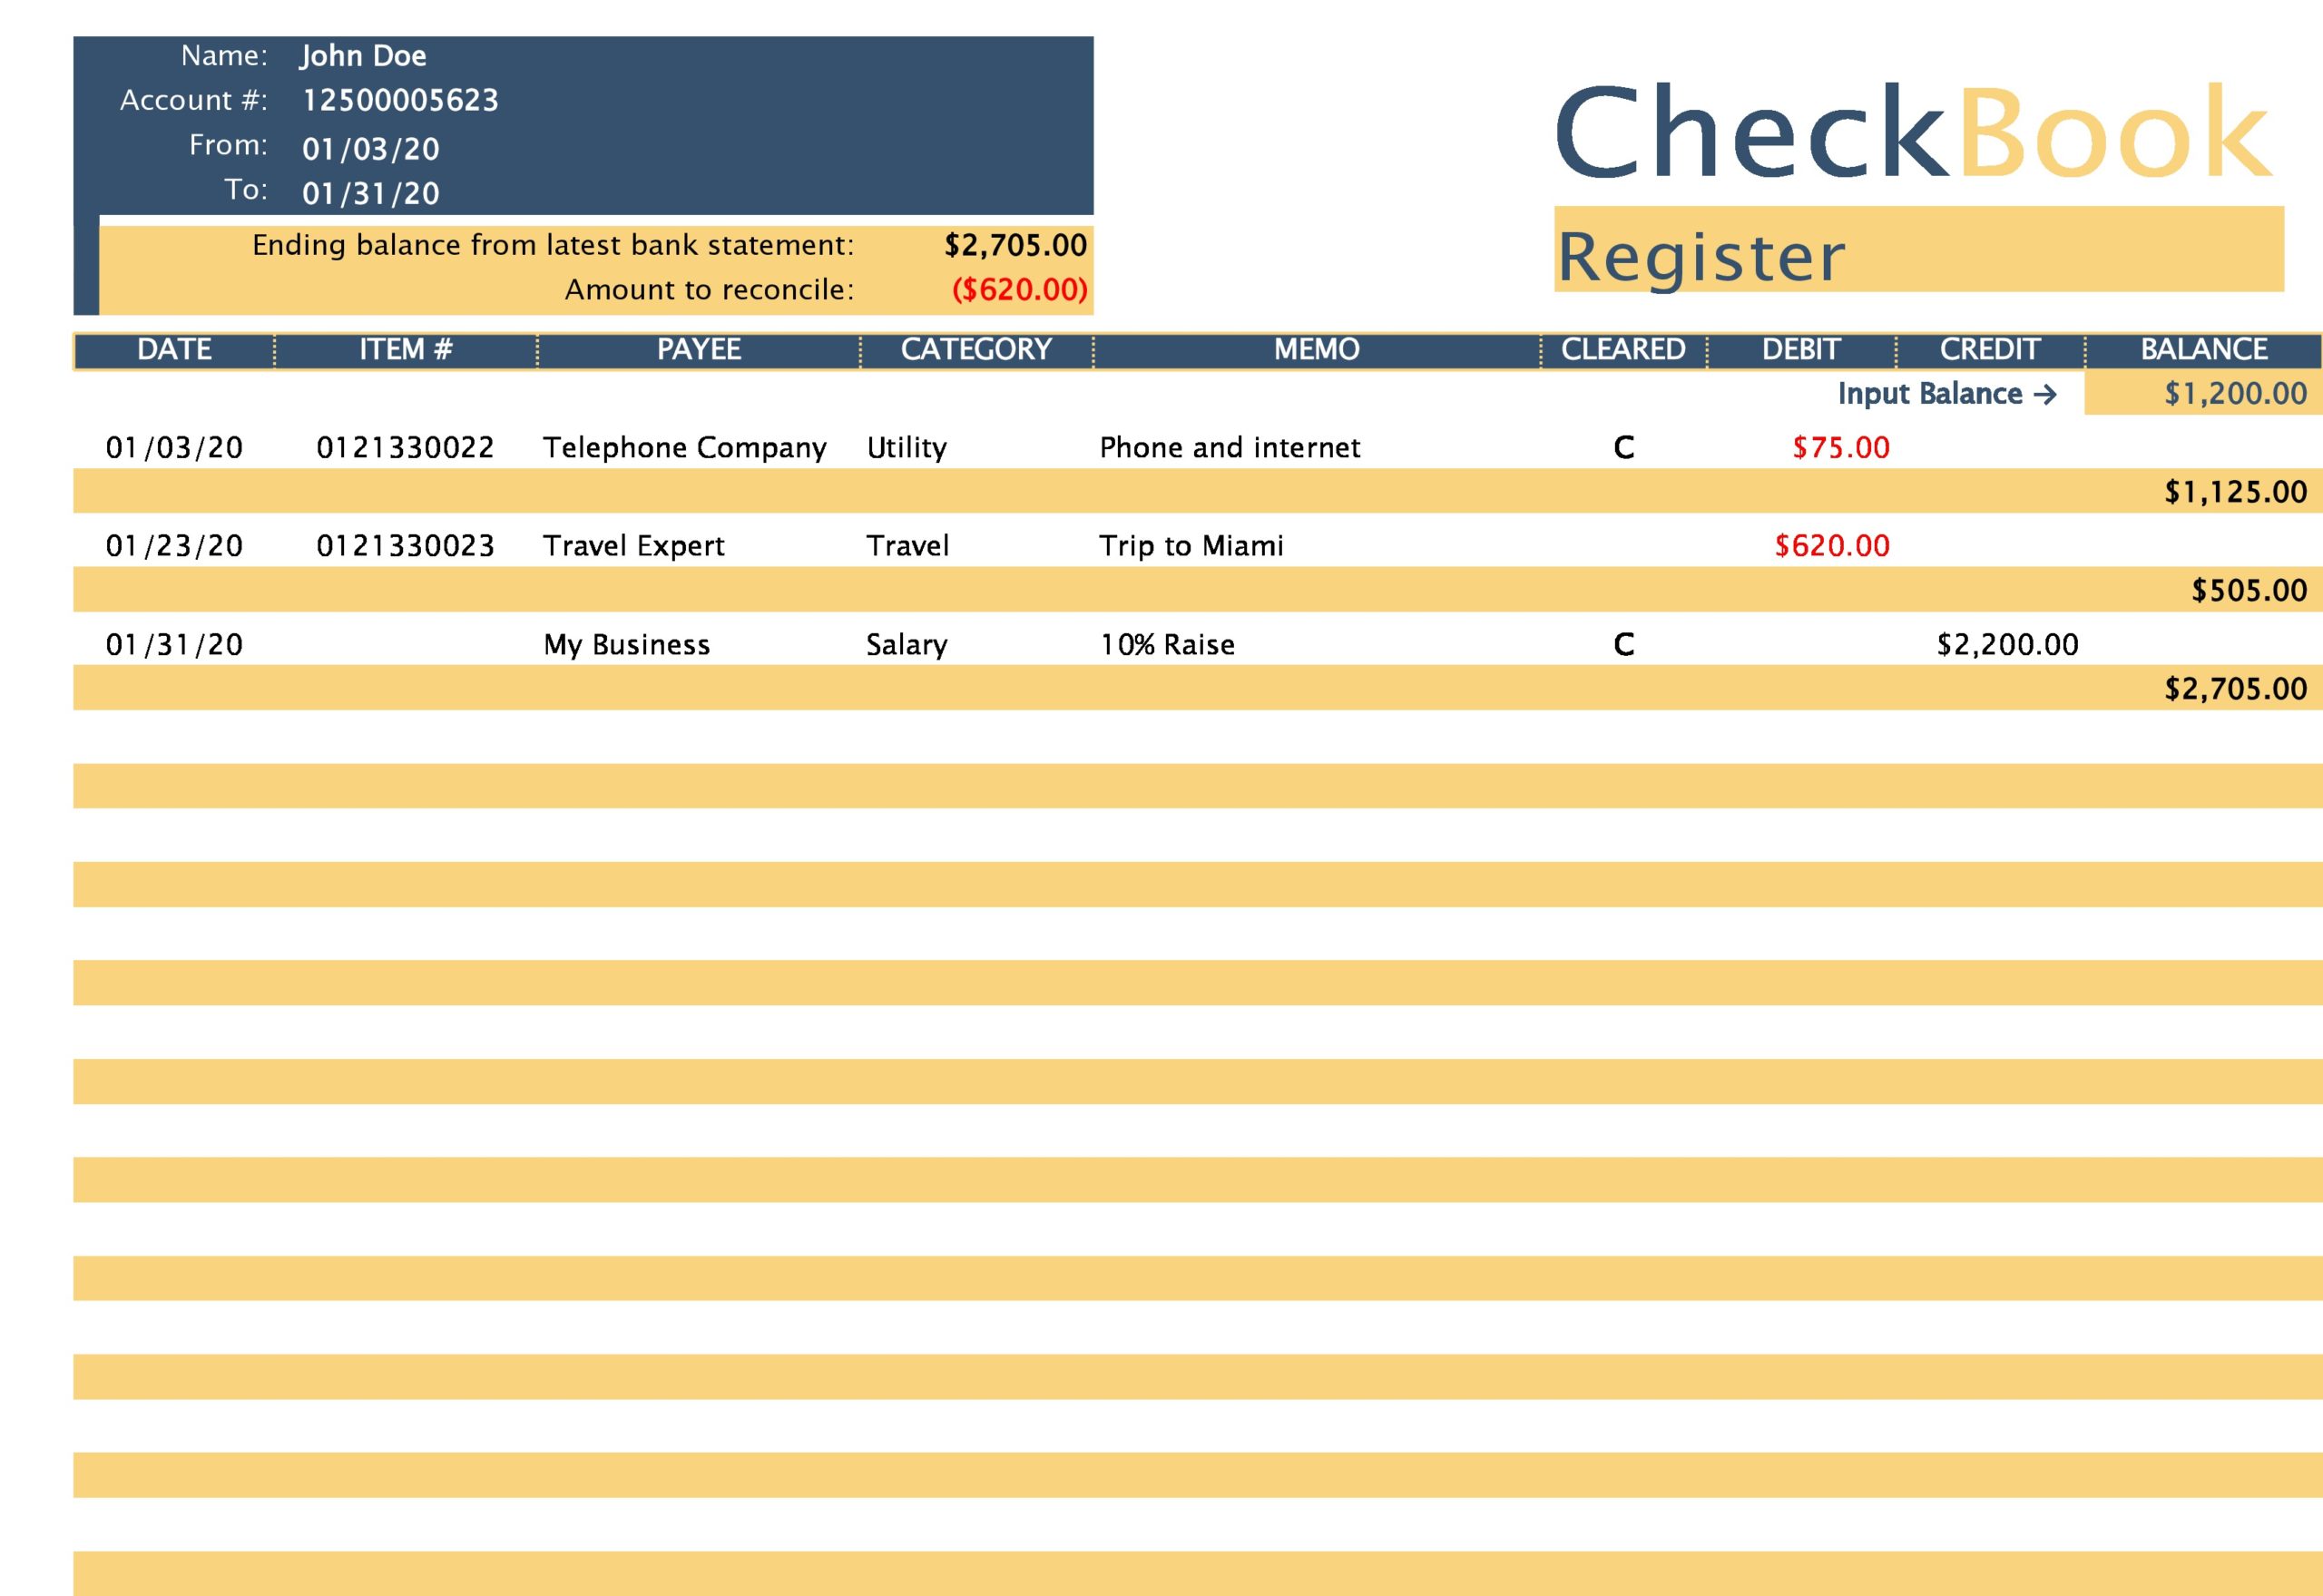 39 Checkbook Register Templates 100% Free Printable ᐅ TemplateLab